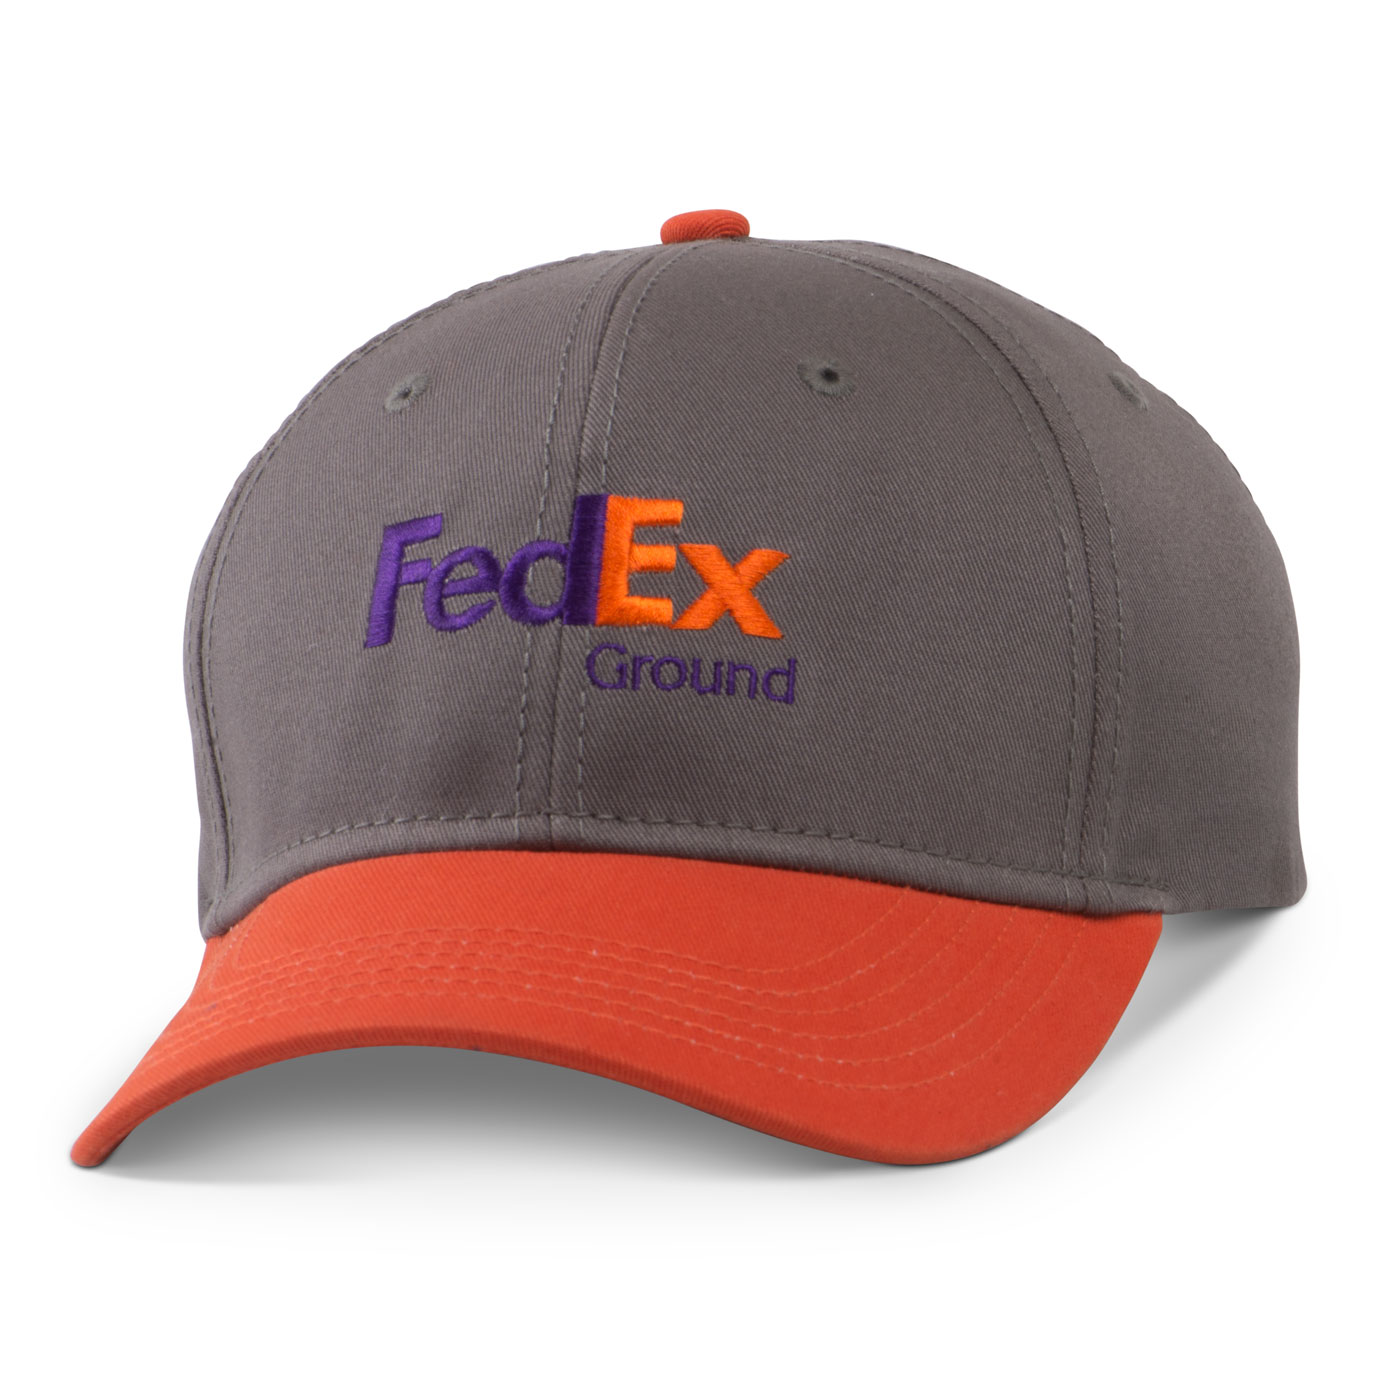 FedEx Ground Structured Twill Cap | The FedEx Company Store